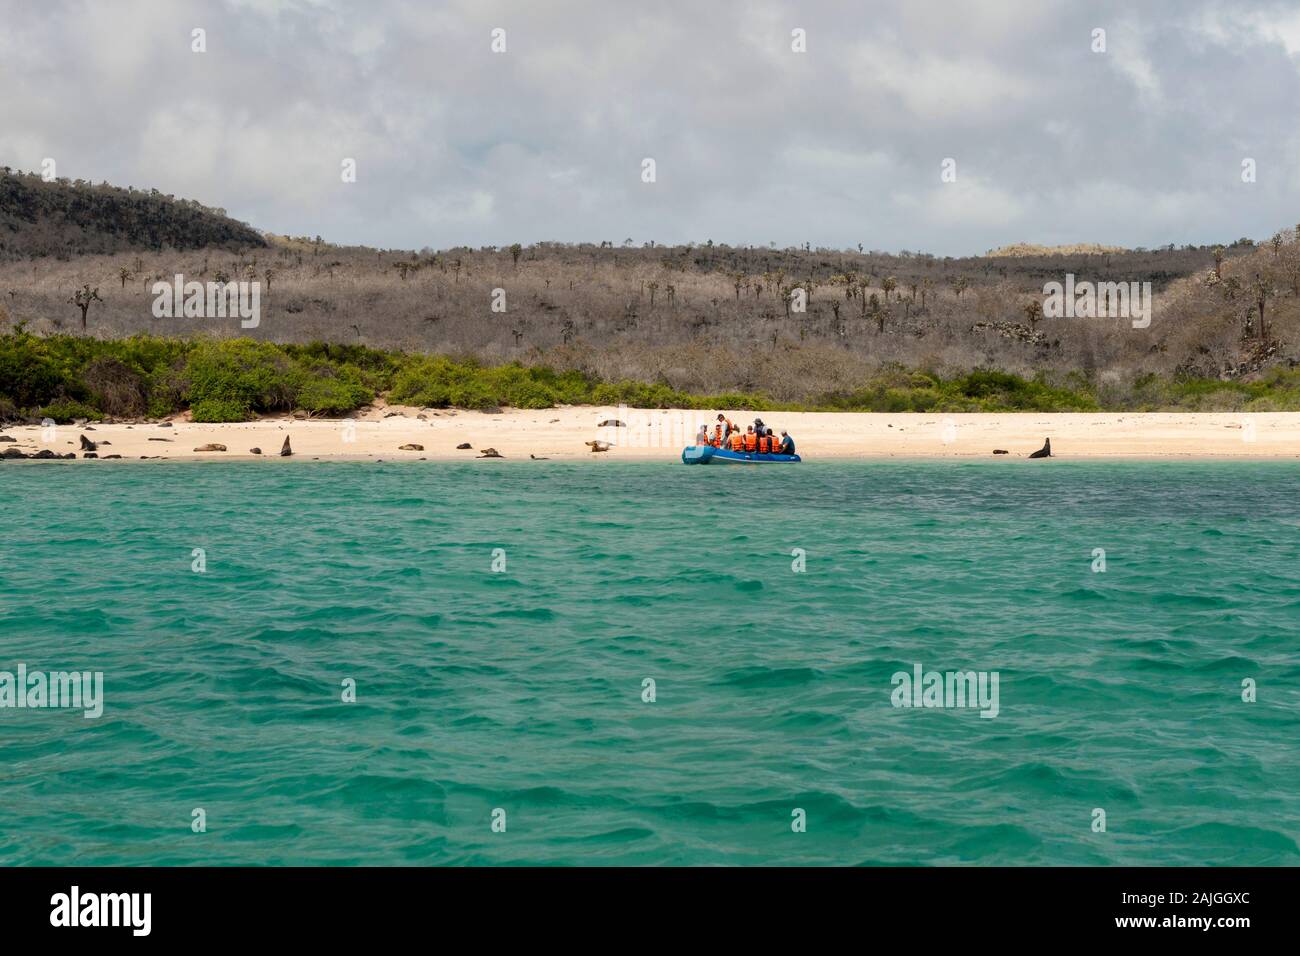 Tourists on a dinghy arriving at Sante Fe island, Galapagos, Ecuador. Stock Photo